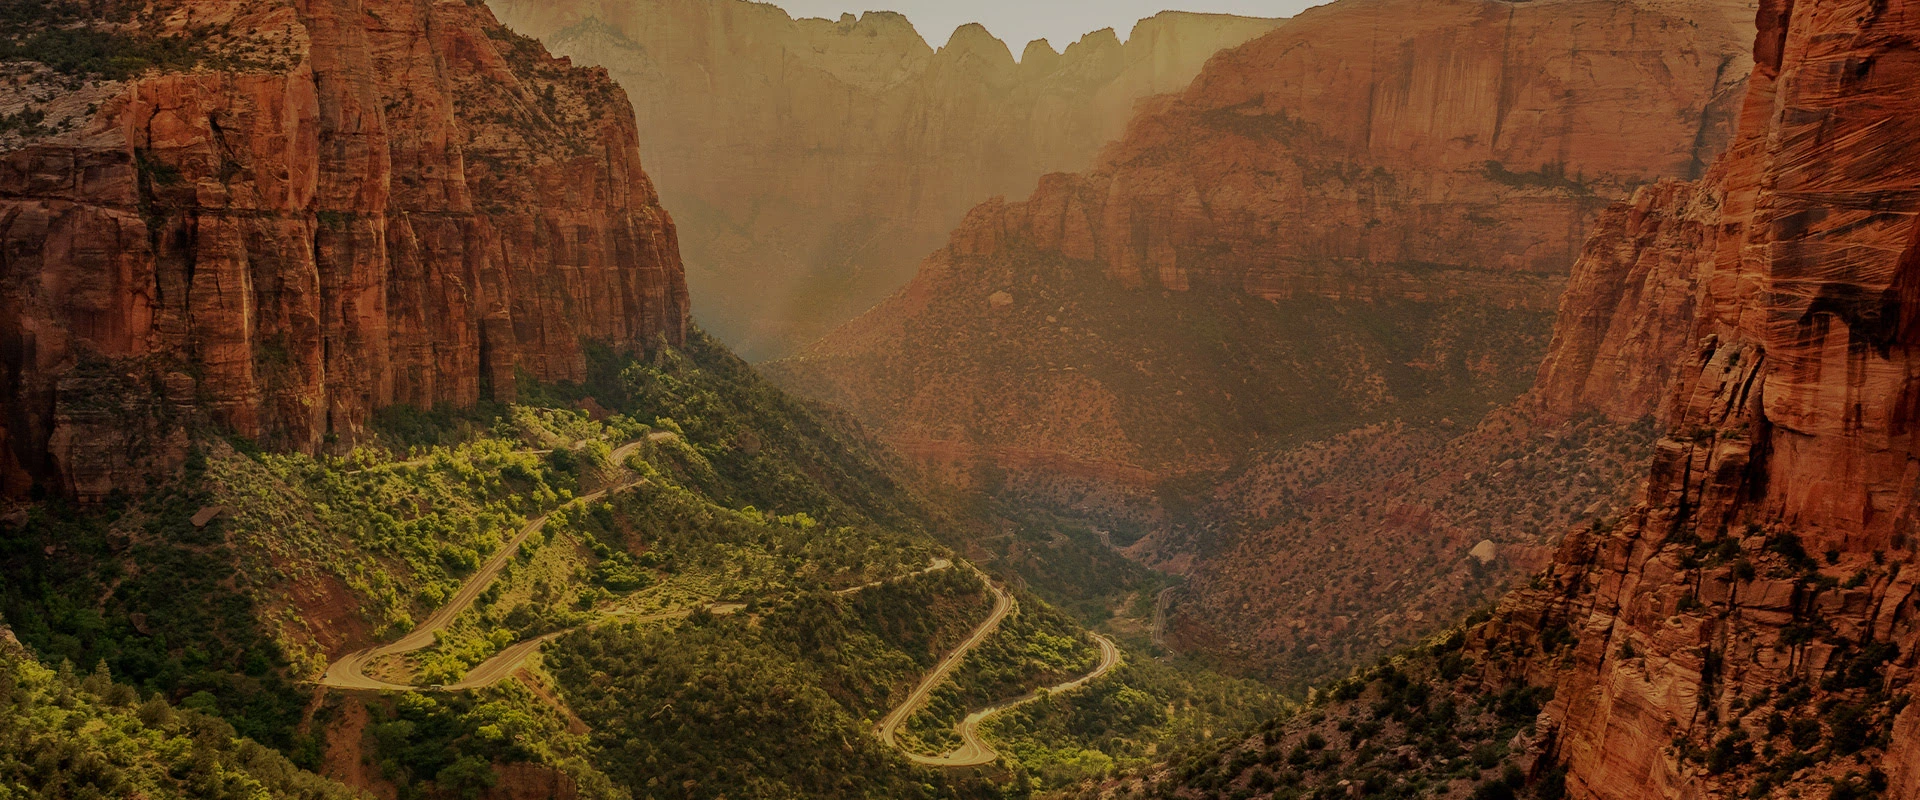 Zions Canyon Trail